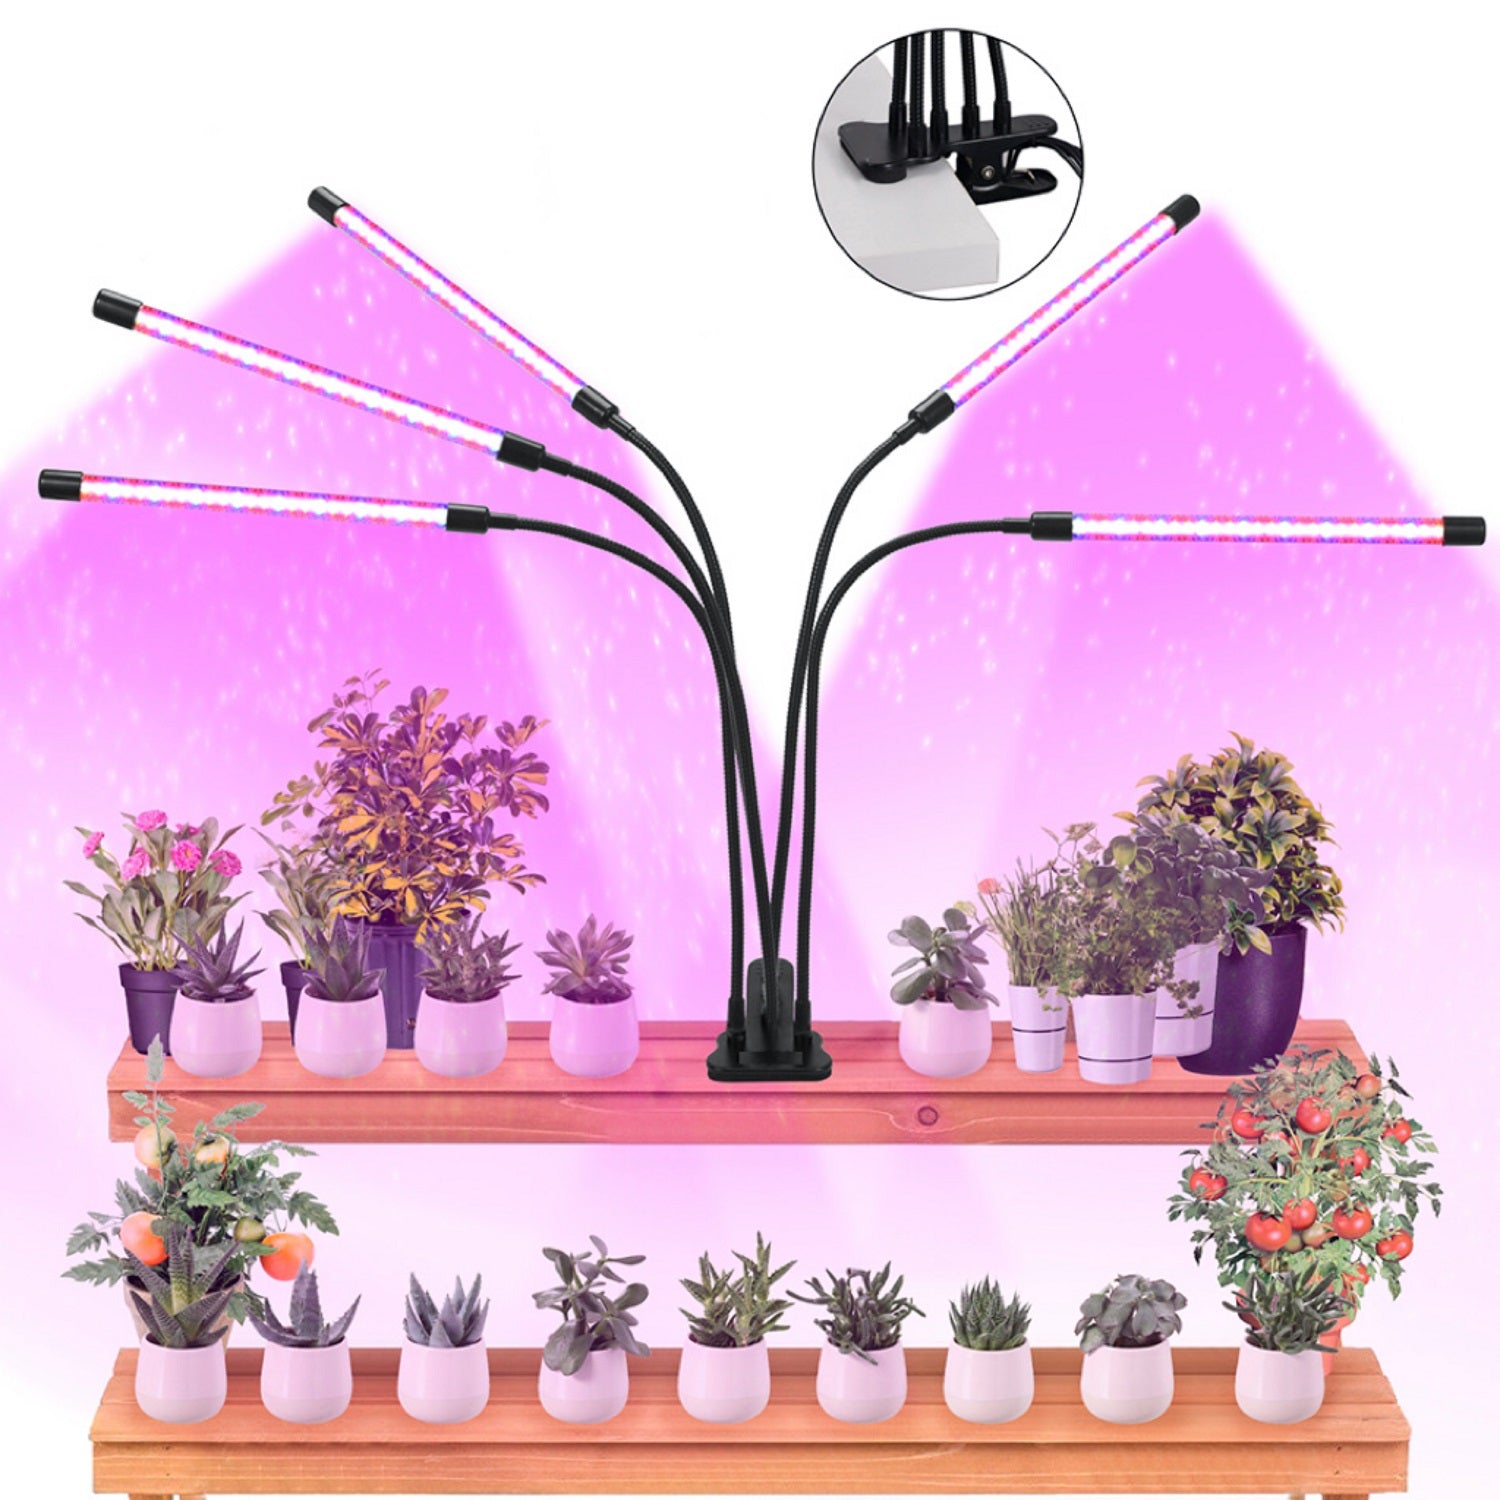 NOVEDEN Plant Grow Light 4 Head Grow Lamp